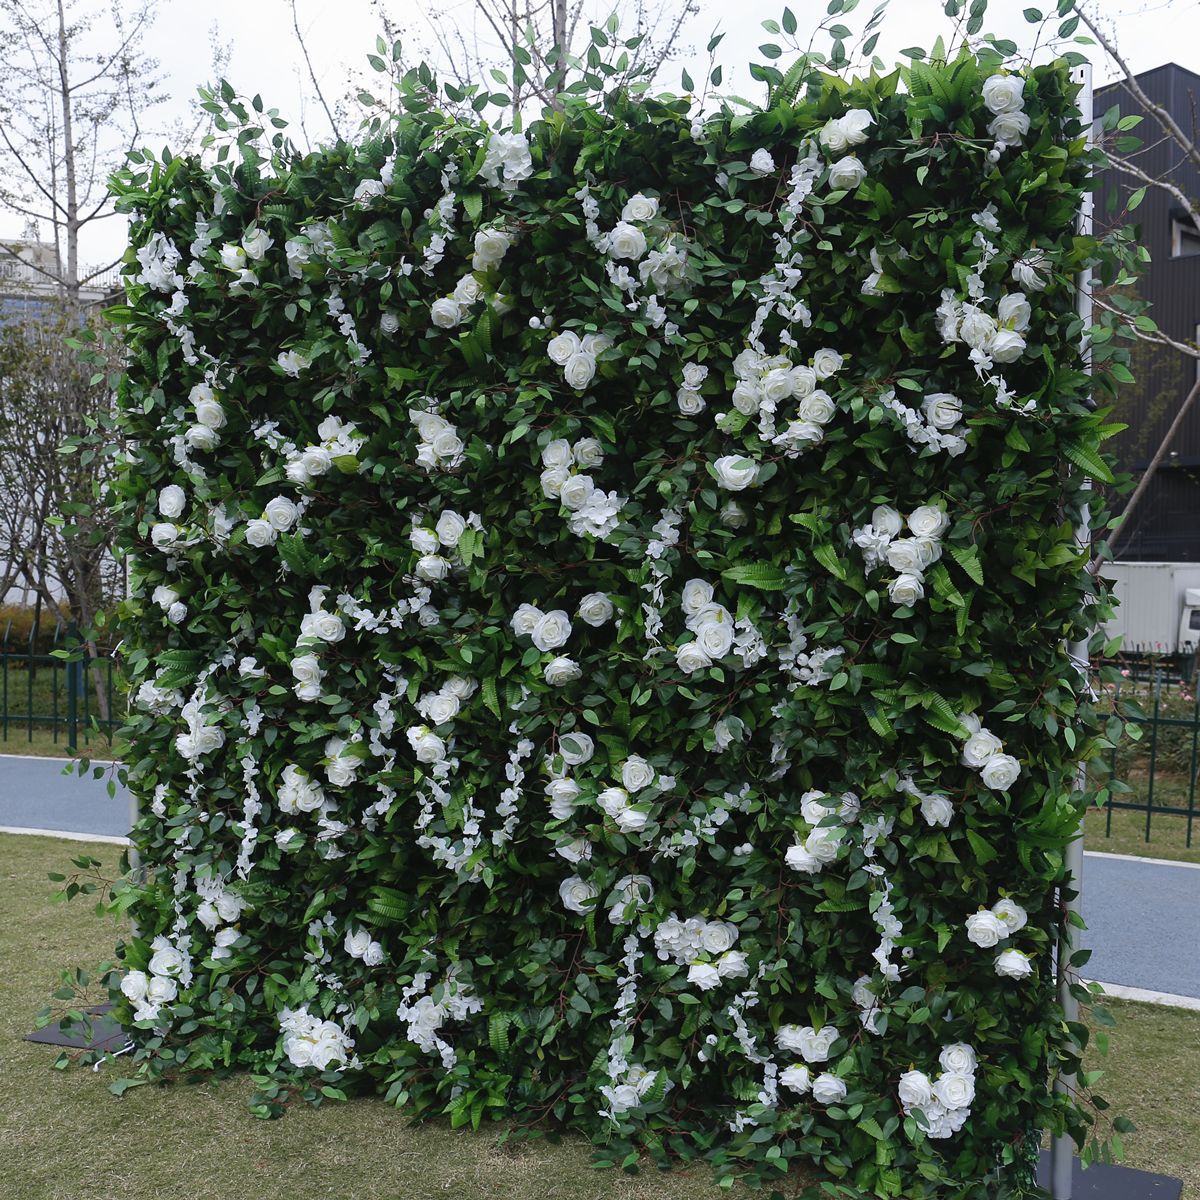 5D 布底シミュレーション植物壁緑の植物壁の背景偽の芝生屋内装飾イメージ壁